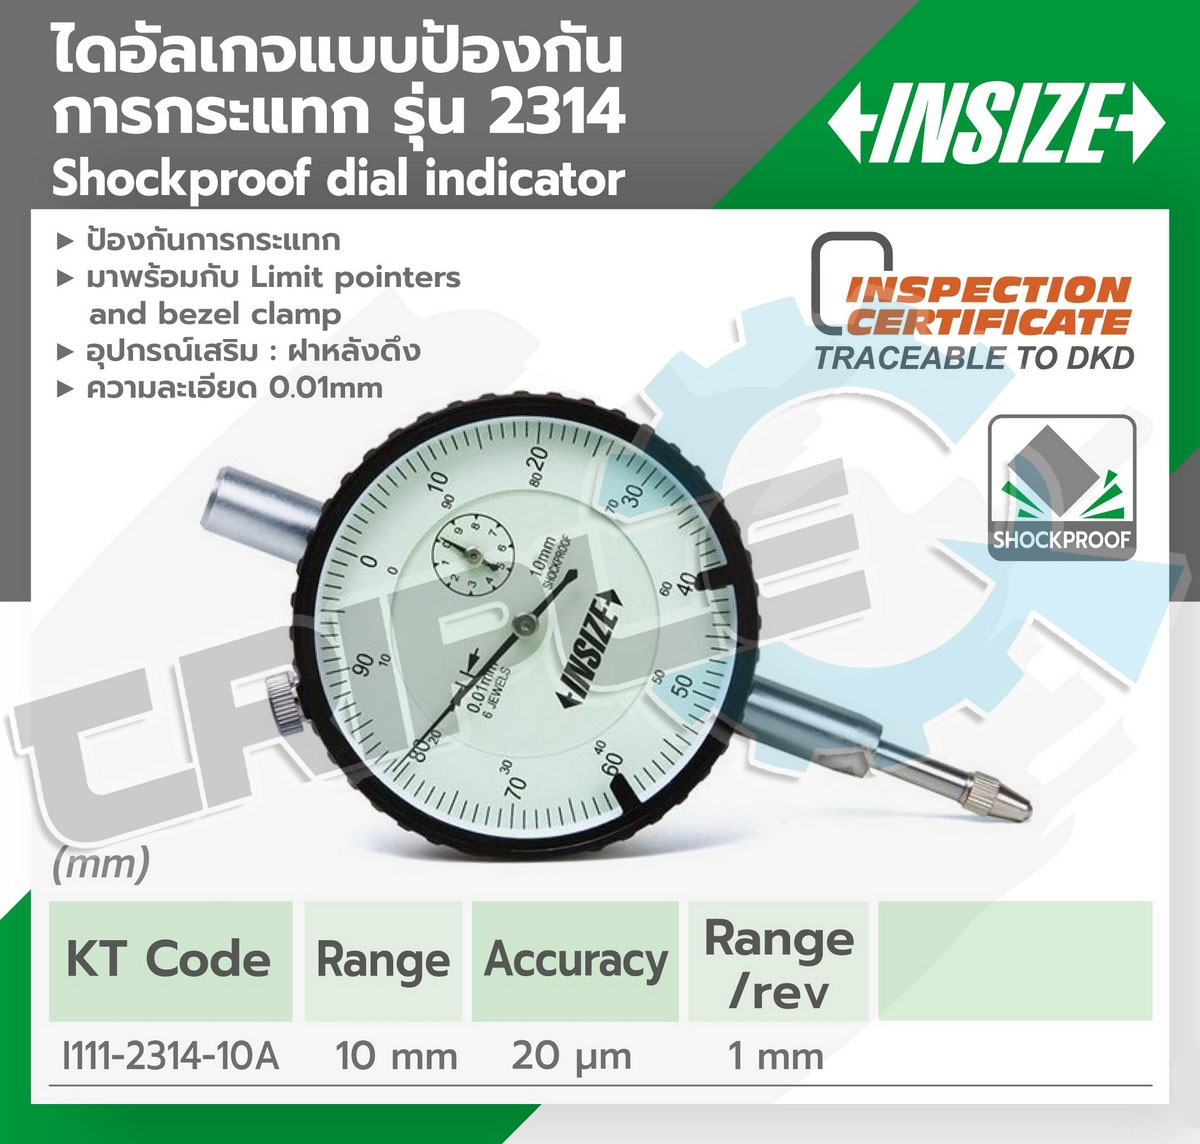 INSIZE - เครื่องไดอัลเกจแบบป้องกันการกระแทก (Shockproof Dial Indicator) รุ่น 2314-10A ช่วงระยะวัด 10 มม. ความละเอียด 0.01 มม. Accuracy 20 μm Hysteresis 3 µm Range/rev 0.5 มม. (ดึงหลัง)